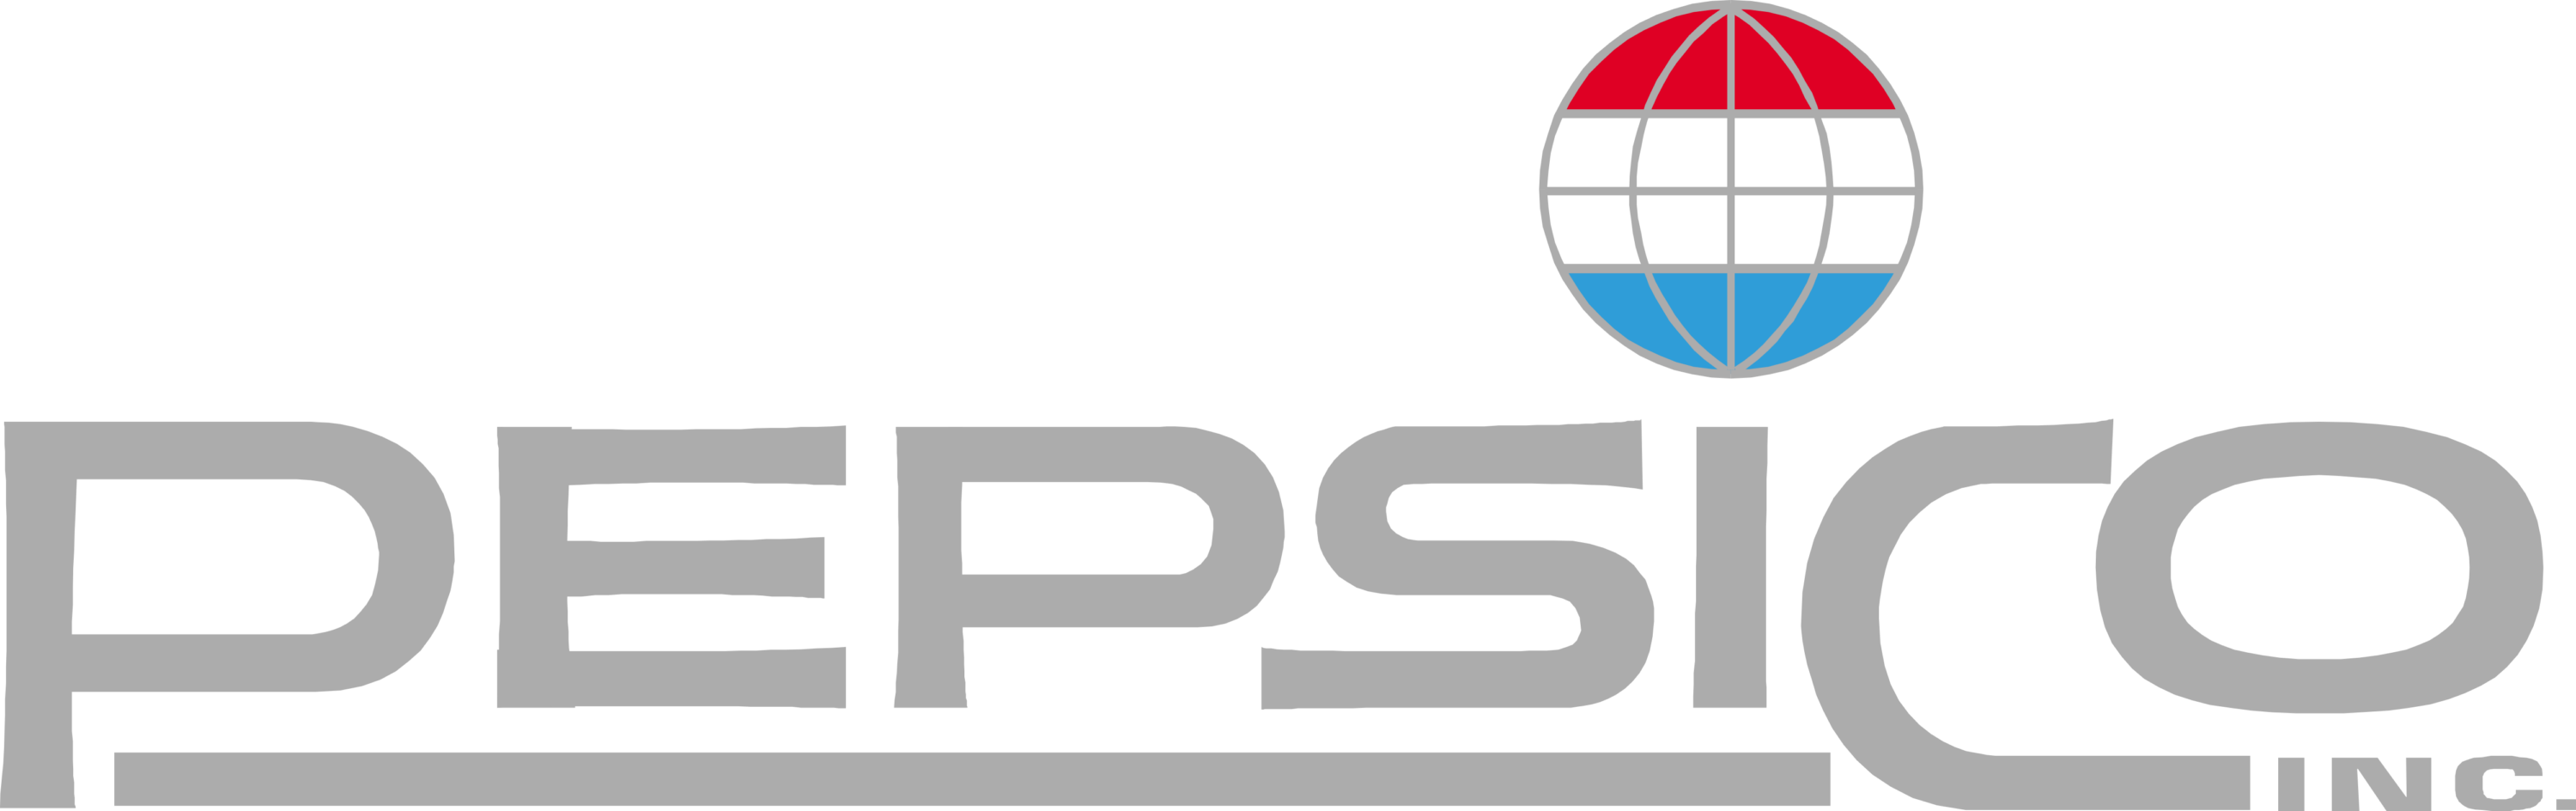 PepsiCo Logo 1985